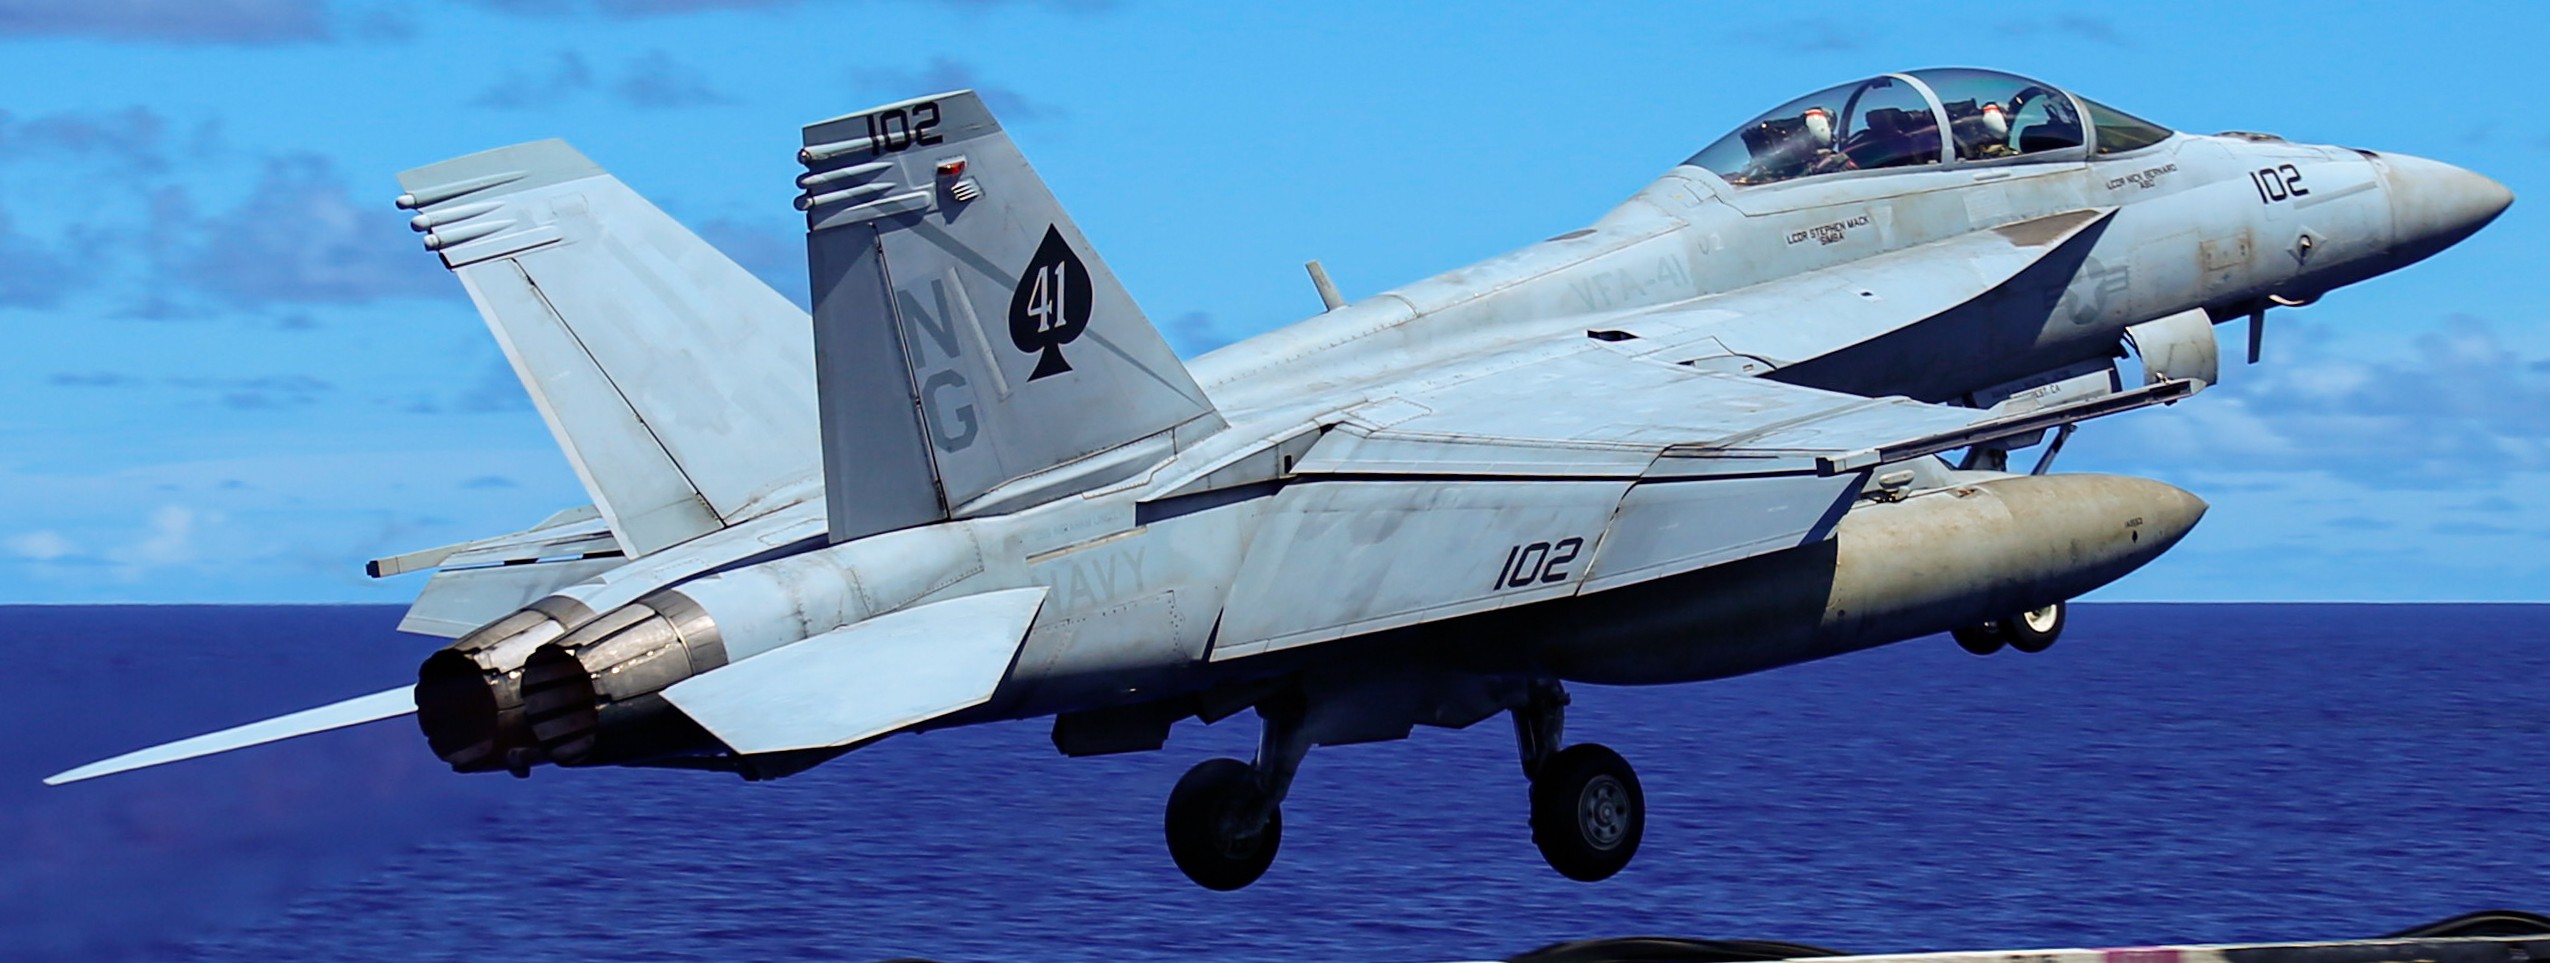 vfa-41 black aces strike fighter squadron f/a-18f super hornet cvw-9 cvn-72 uss abraham lincoln us navy 96